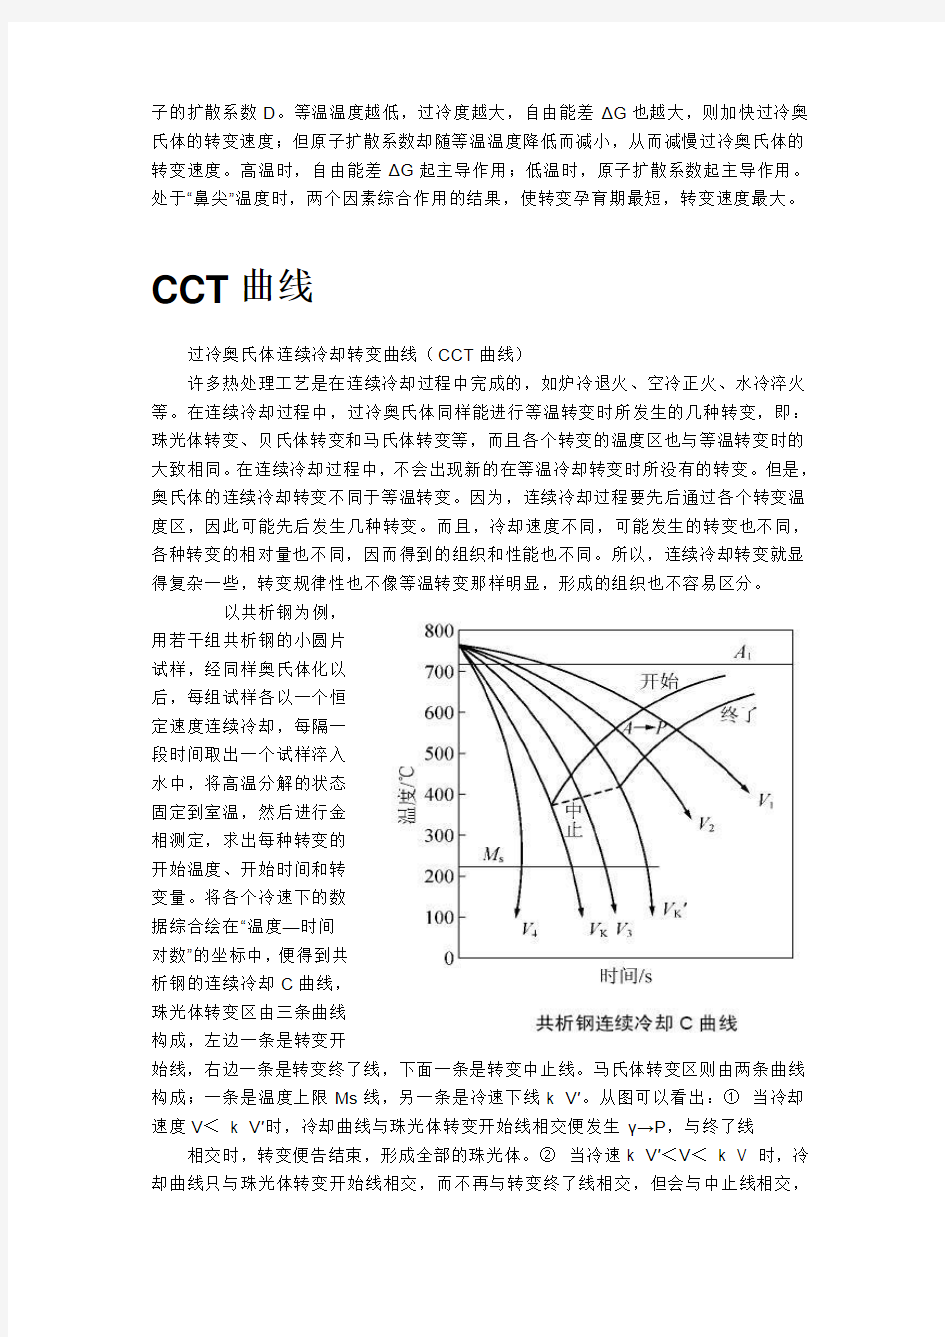 Fe-c TTT CCT图